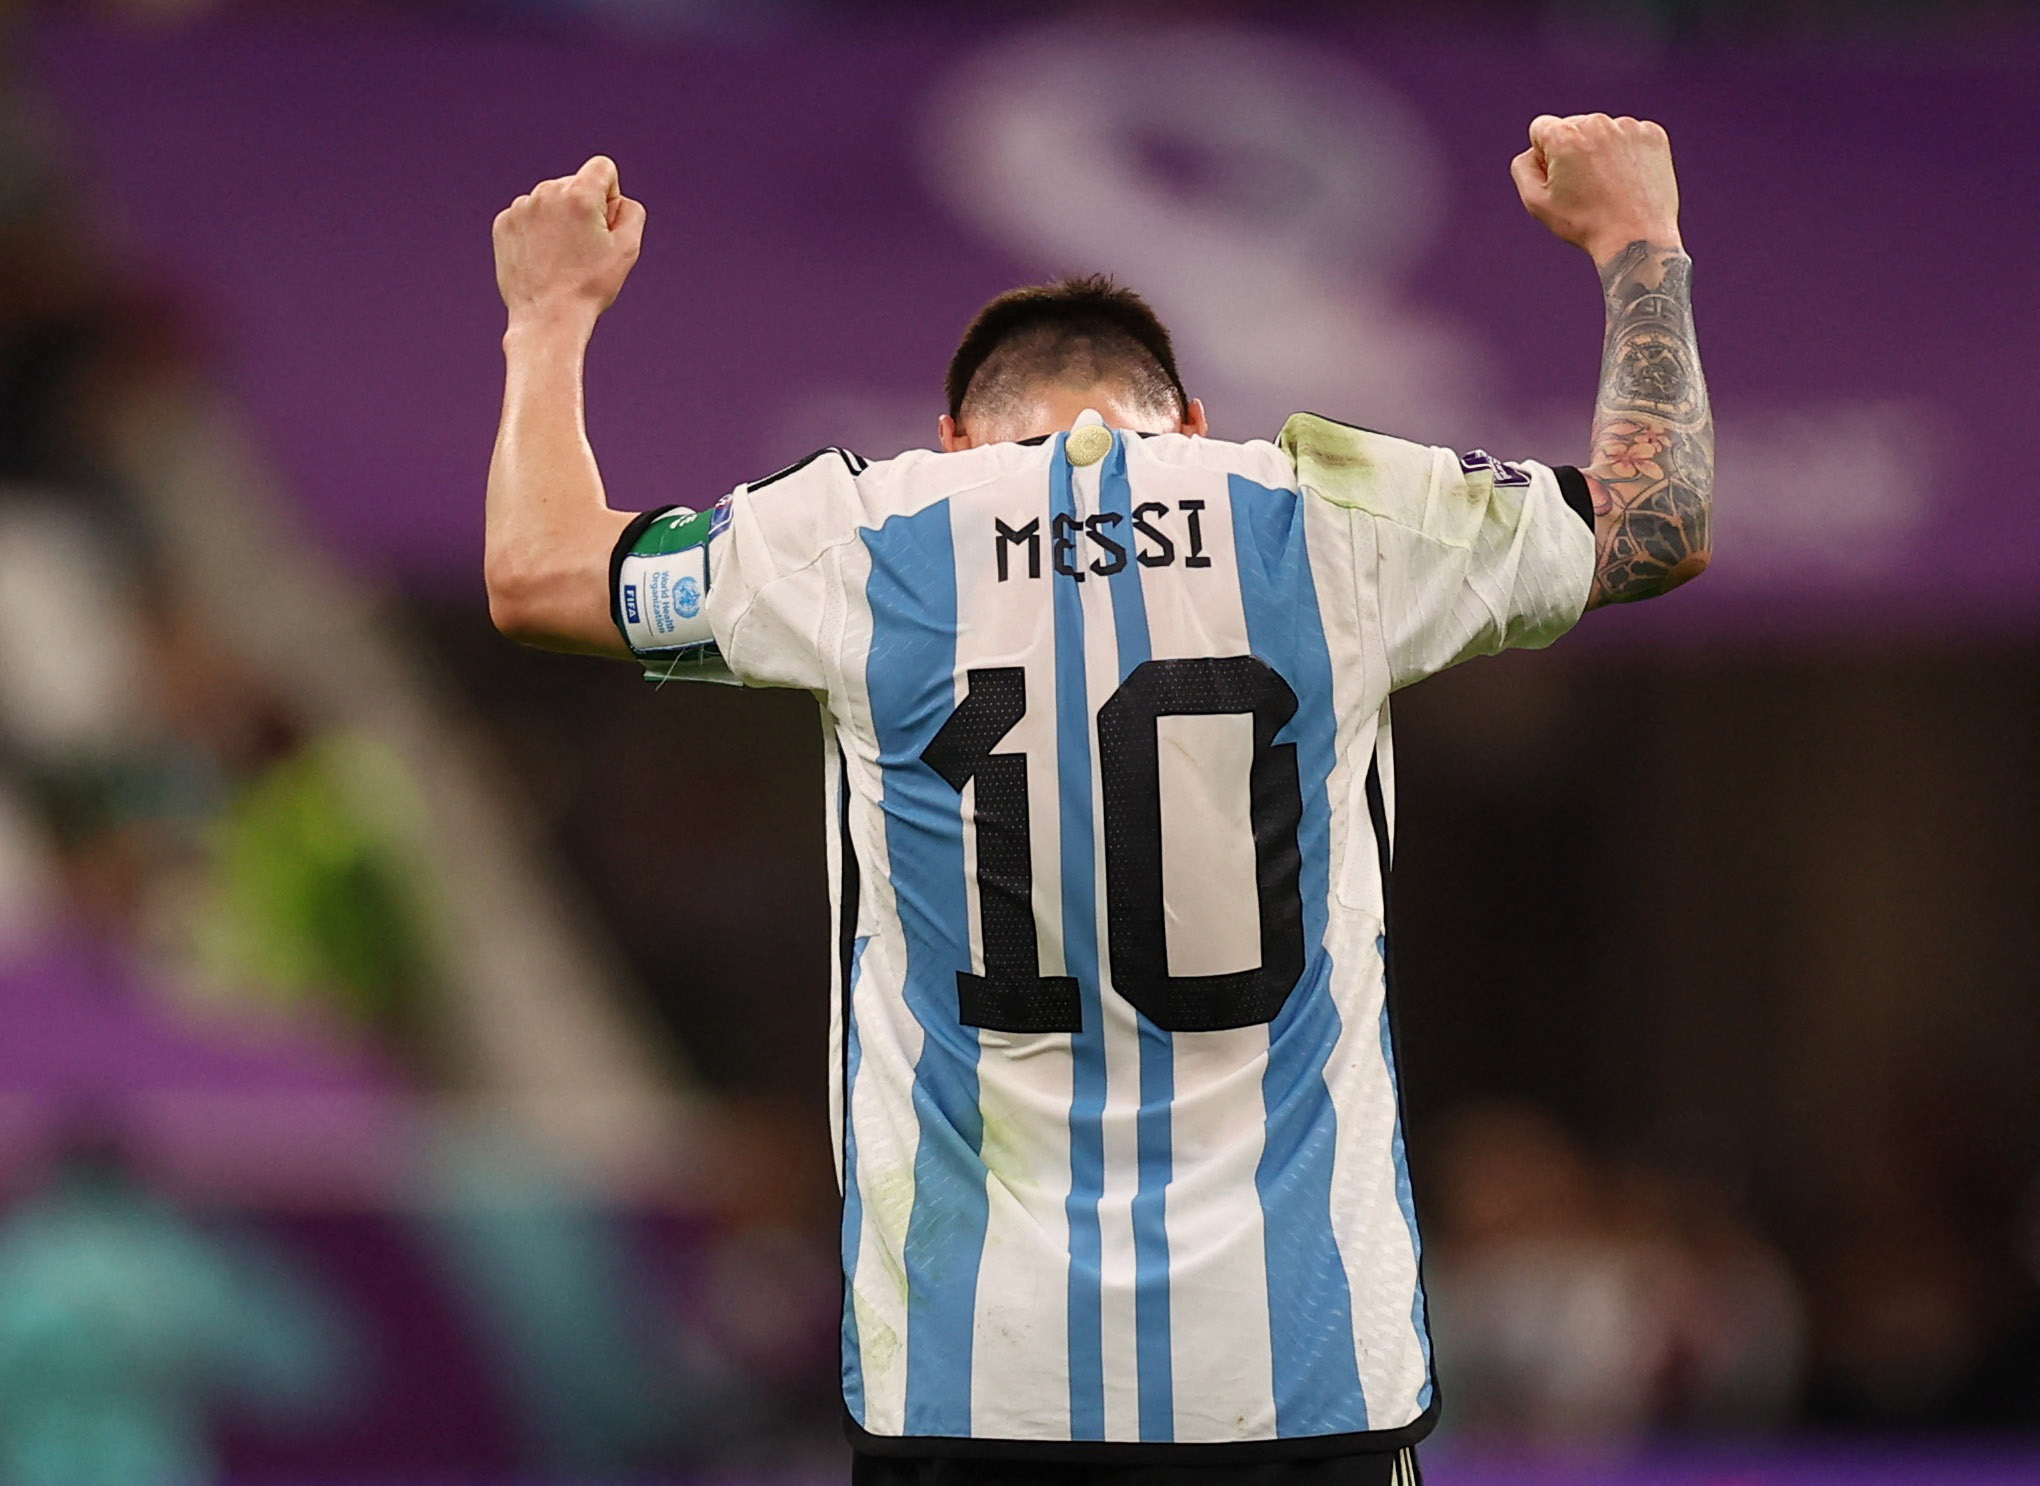 Lionel Messi abrió el partido con un golazo ante México. Celebra la Argentina (REUTERS/Kai Pfaffenbach)